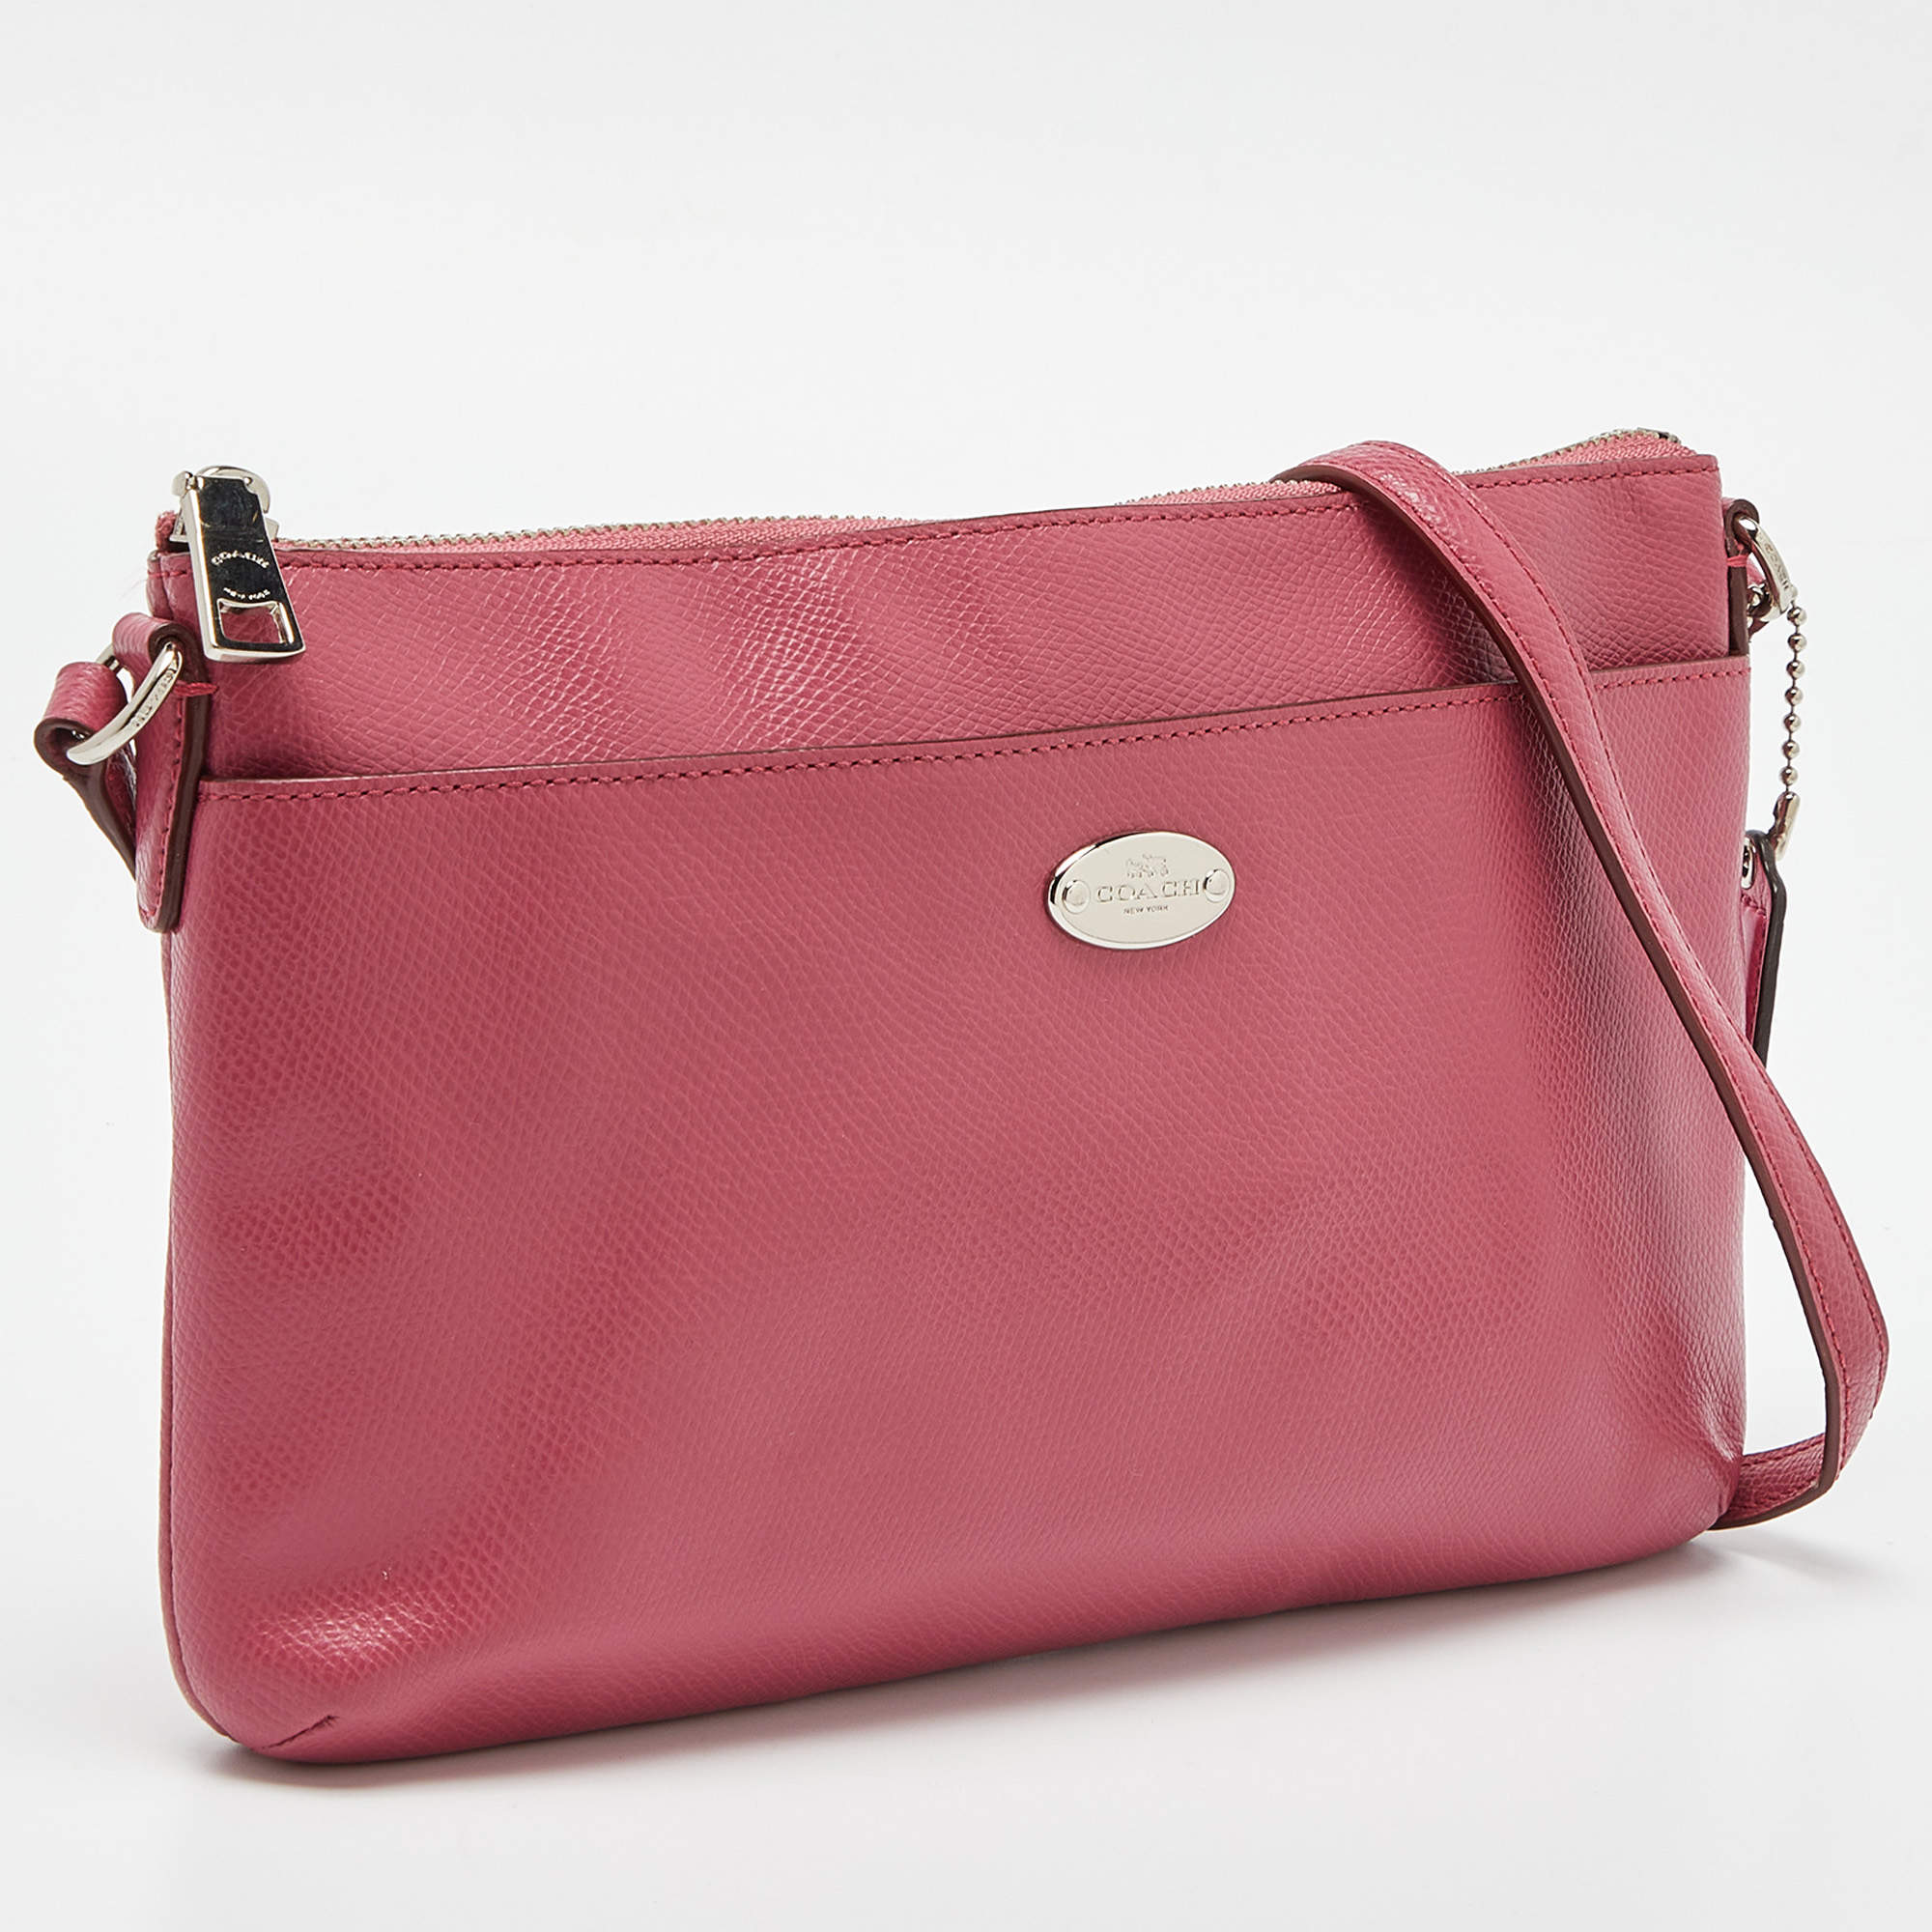 Patent Leather Hot Pink Genuine Coach Y2k Mini Handbag - Etsy